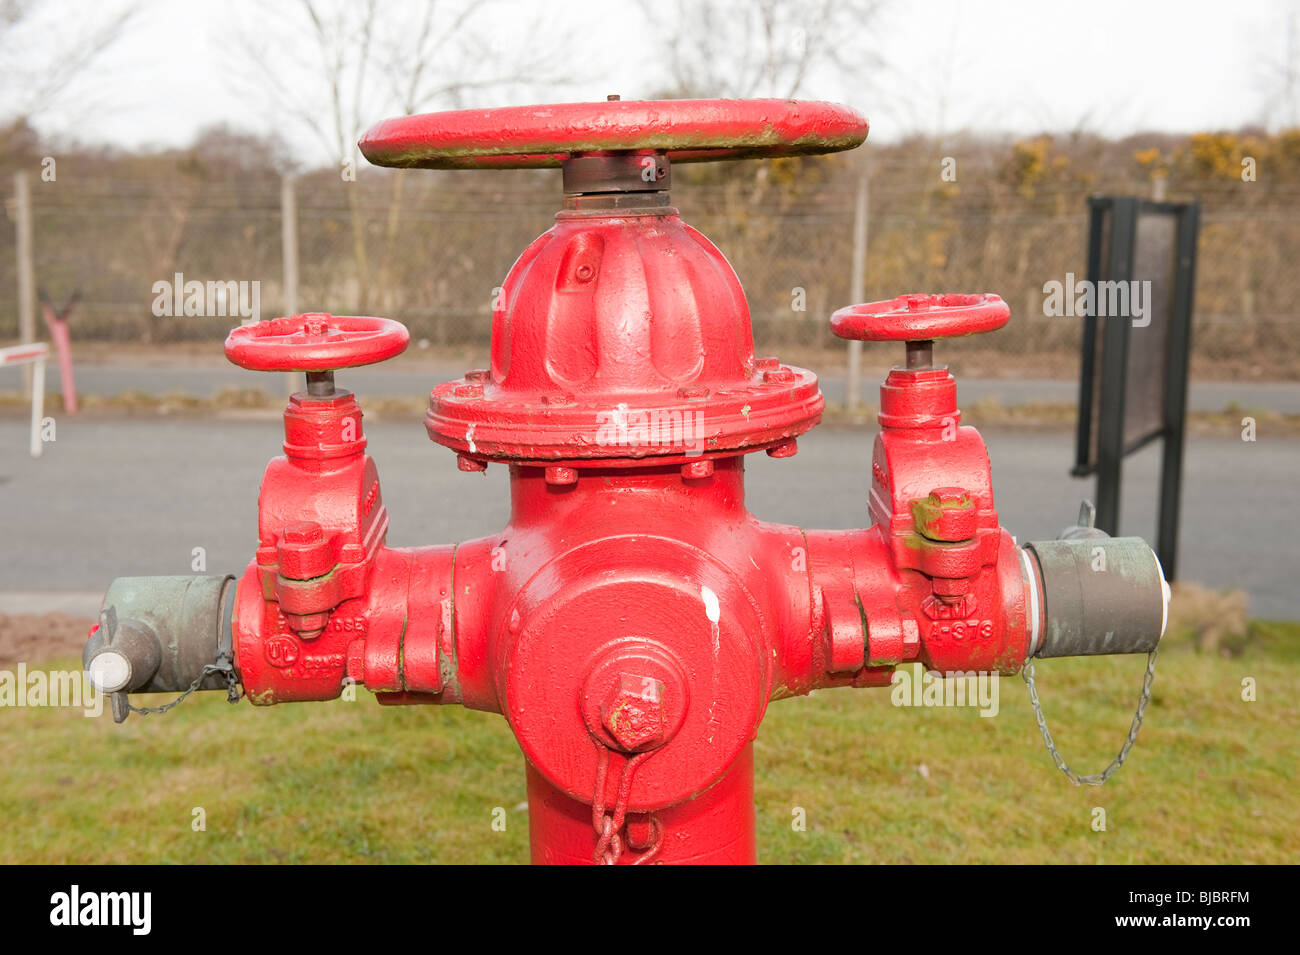 Red Fire Hydrant mit Rad-Ventile Stockfotografie - Alamy